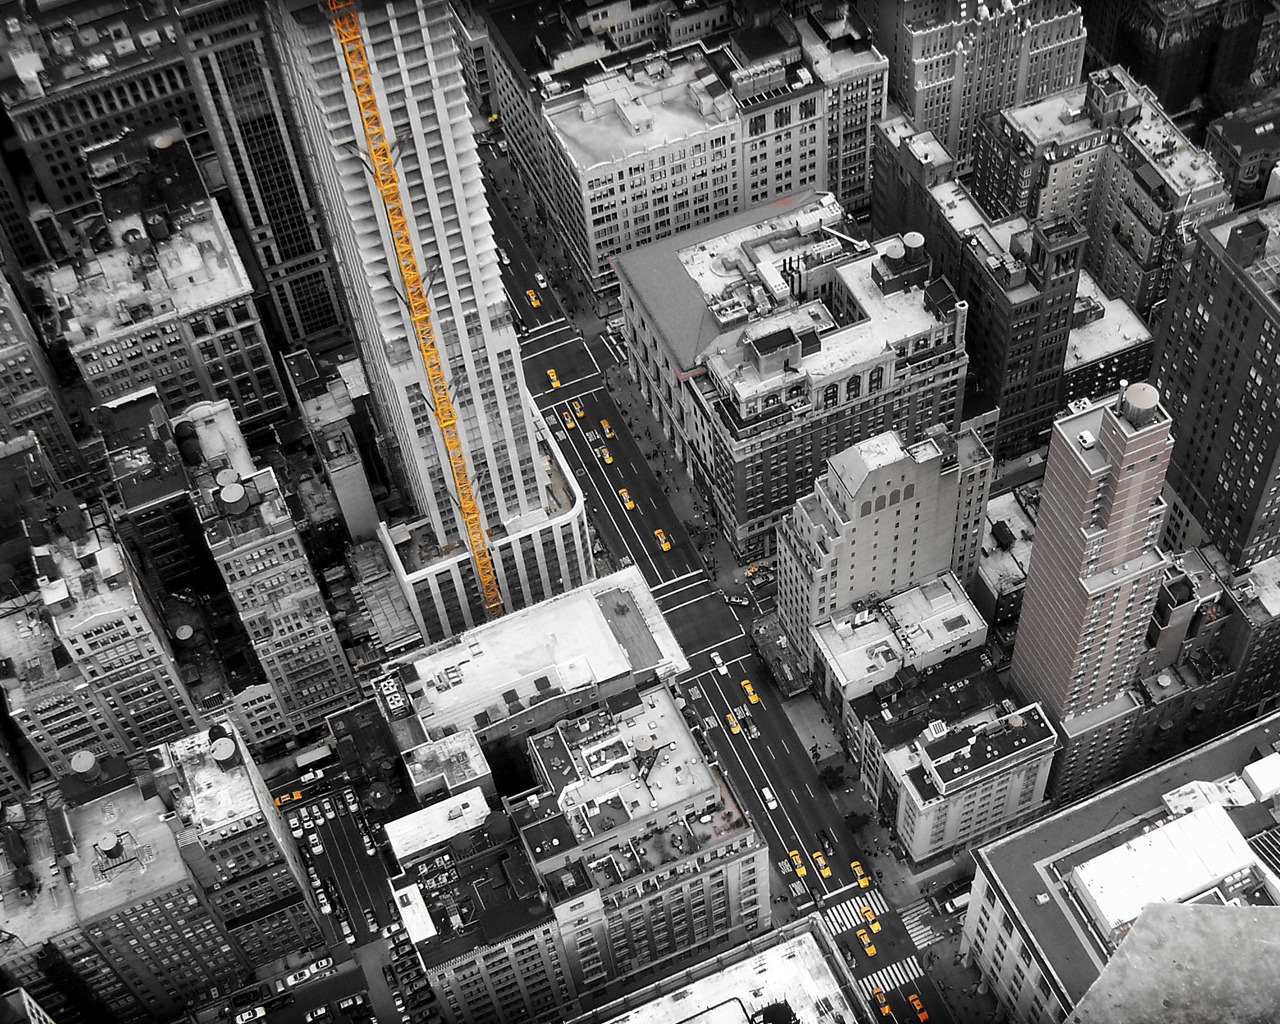 Streets of New York 1280 x 1024 Wallpaper